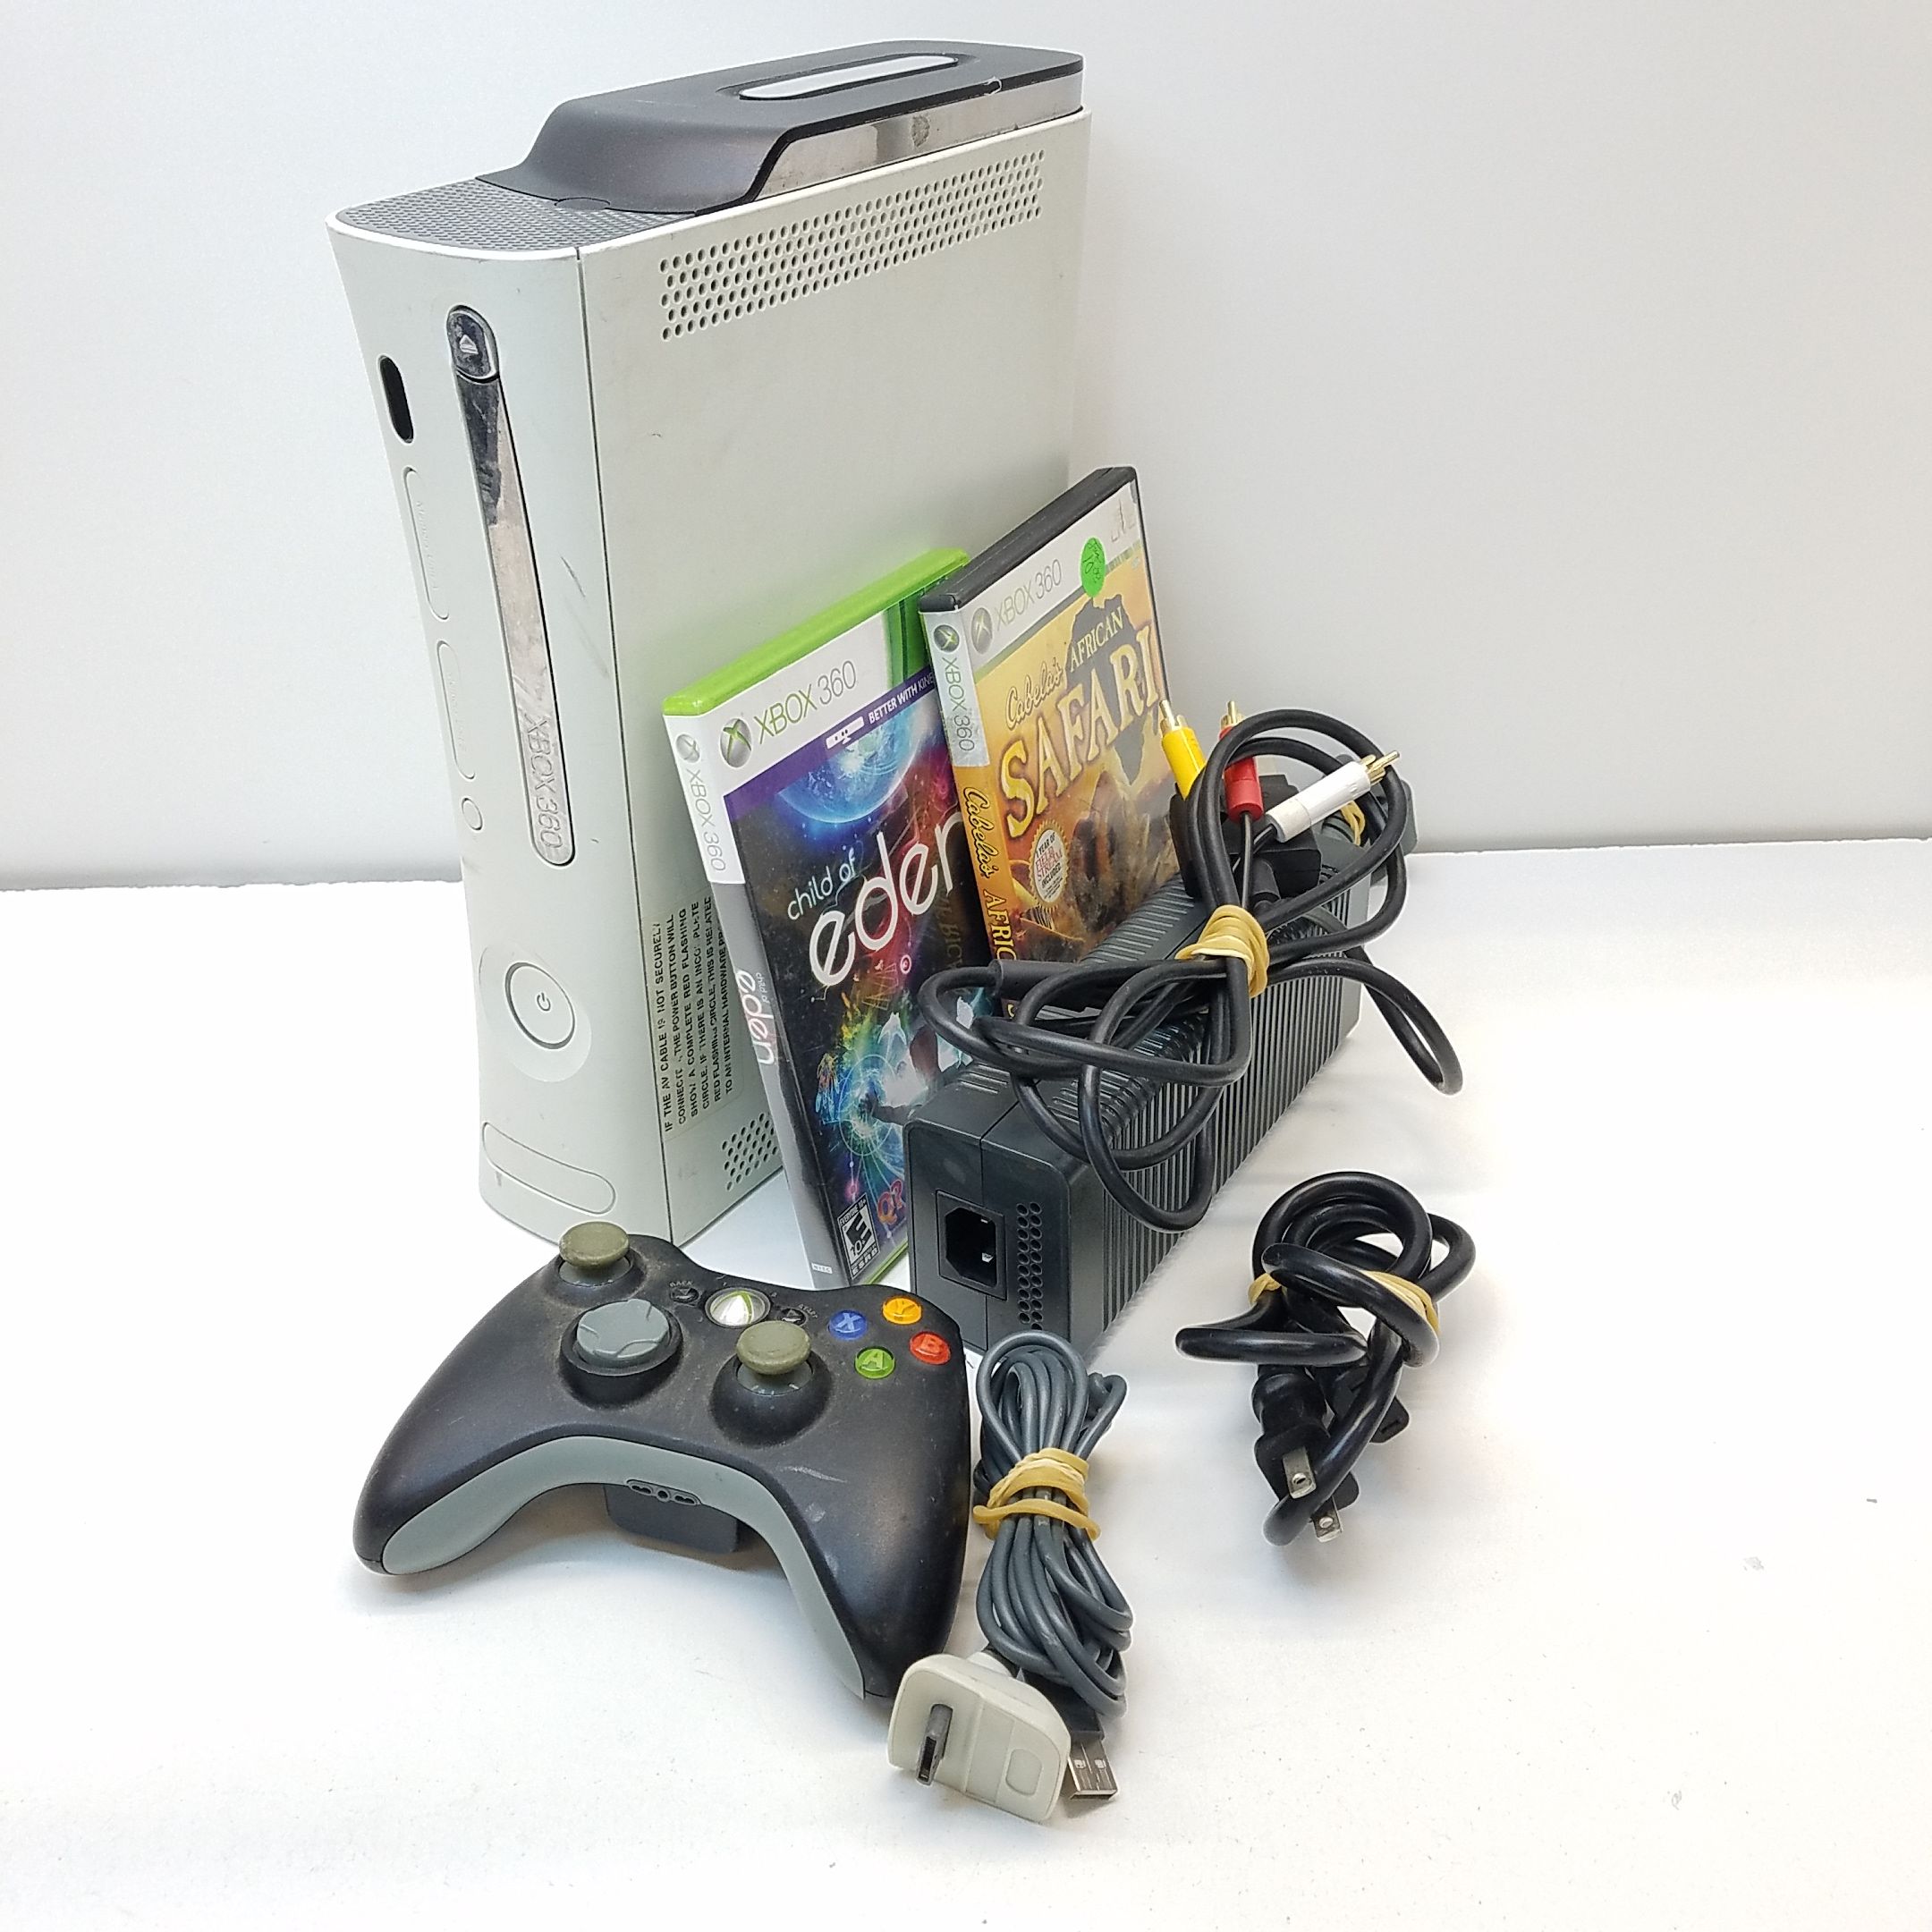 Microsoft Xbox 360 Elite Gaming Consoles for sale in São Gonçalo